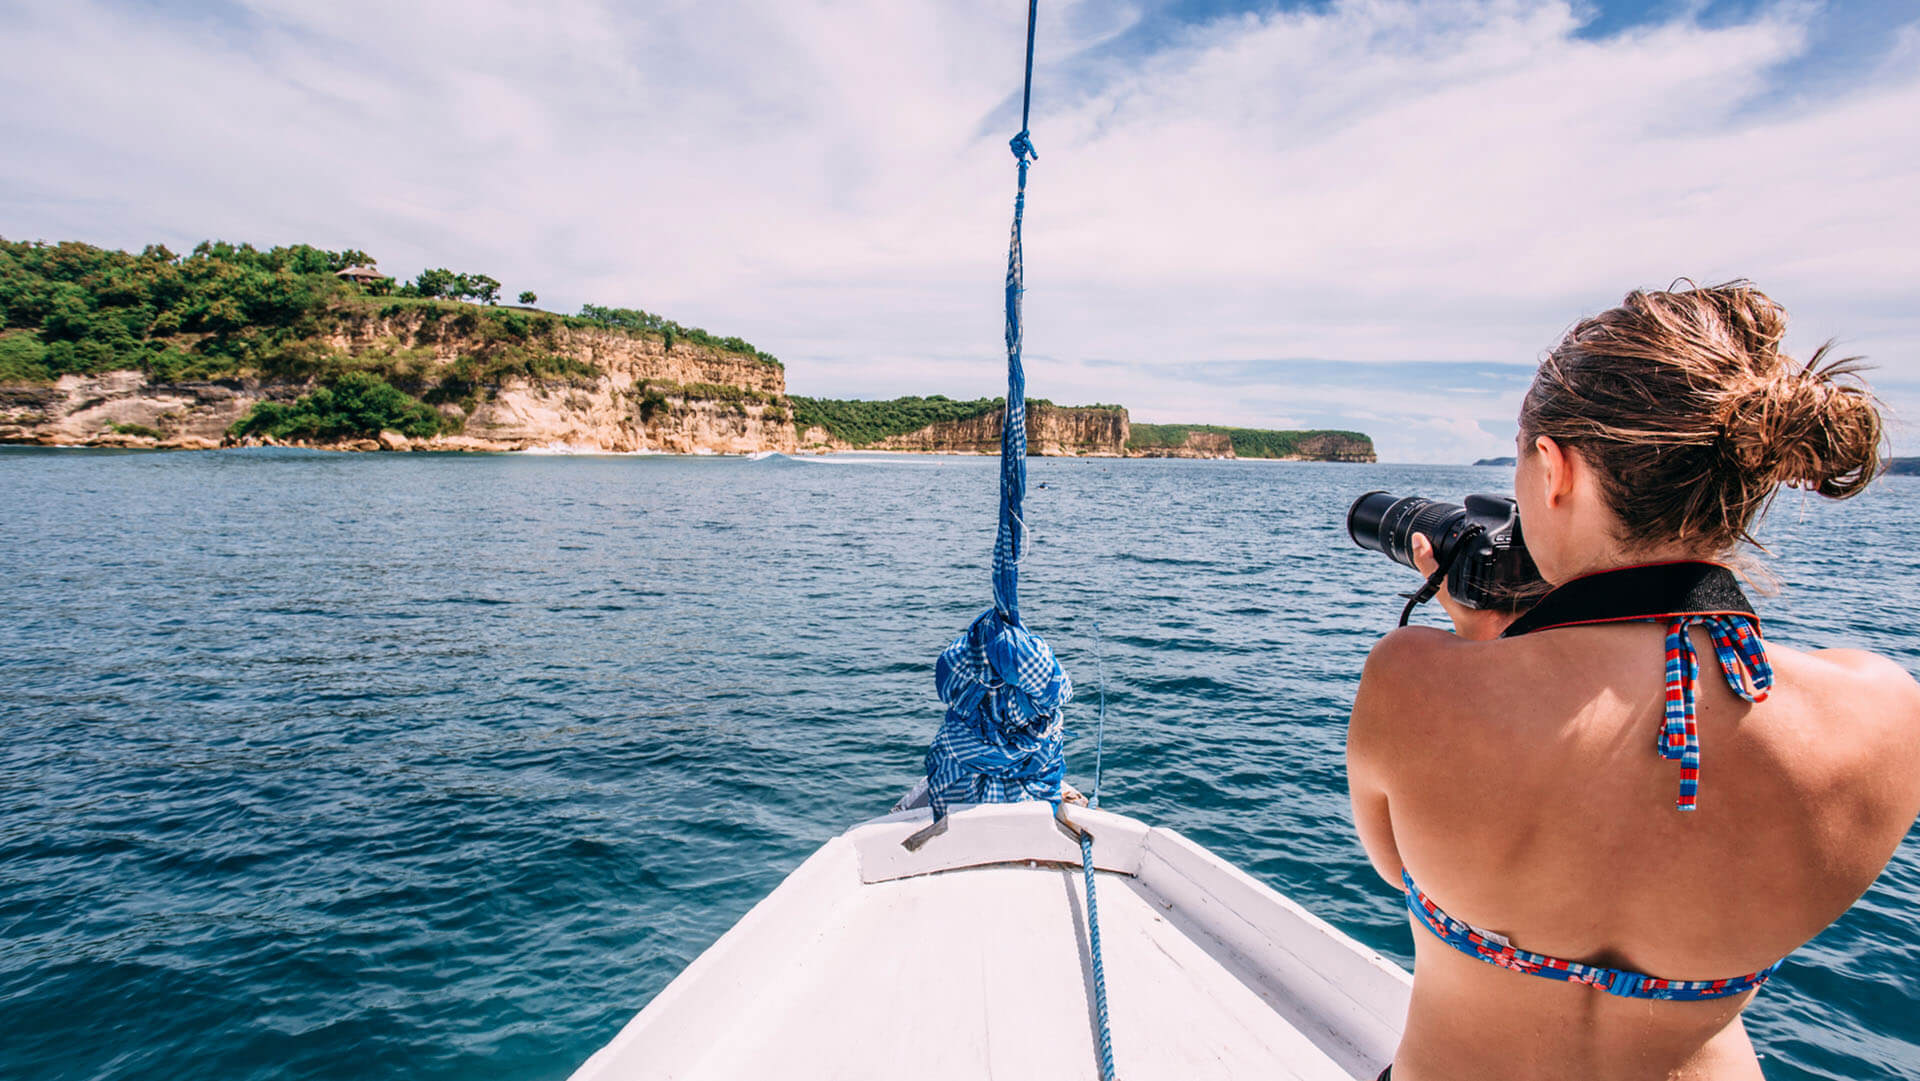 Blond girl in bikini on boat at sea taking photograph of ocean landscape